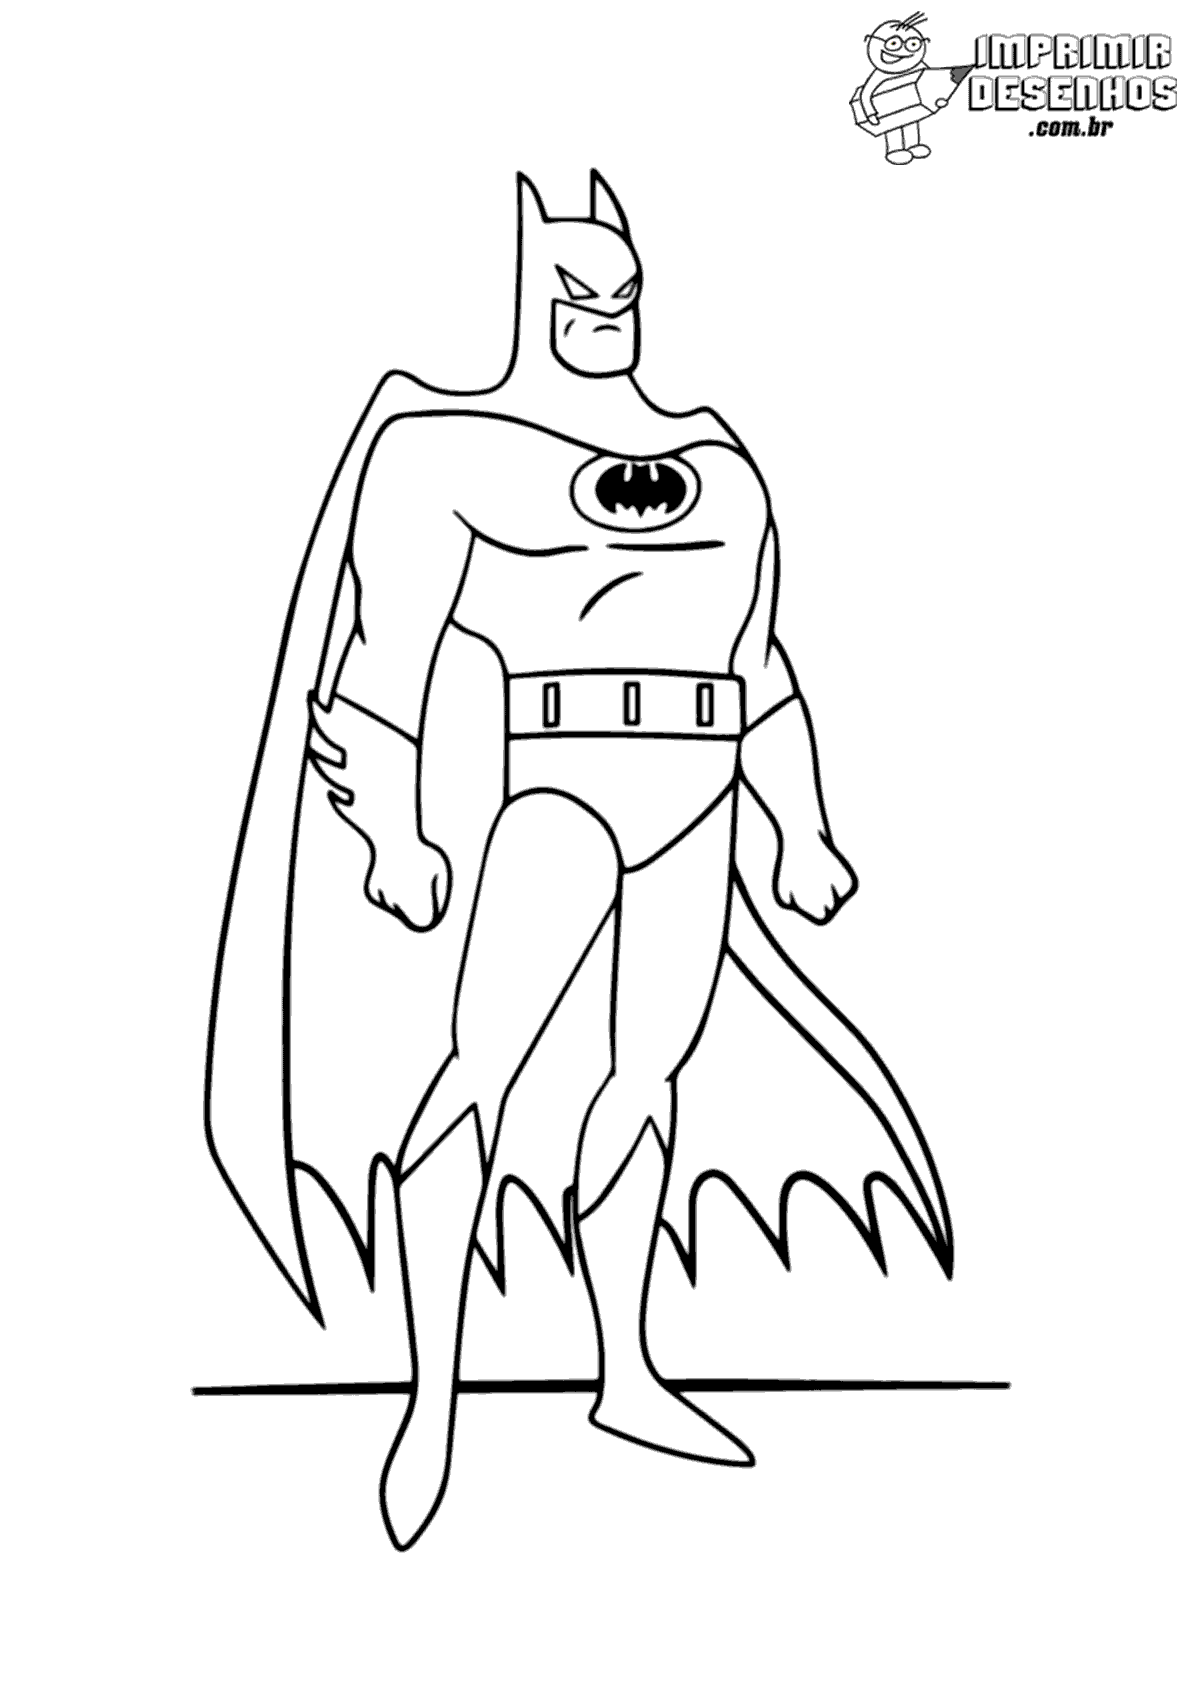 Batman clássico para colorir e pintar - Imprimir Desenhos